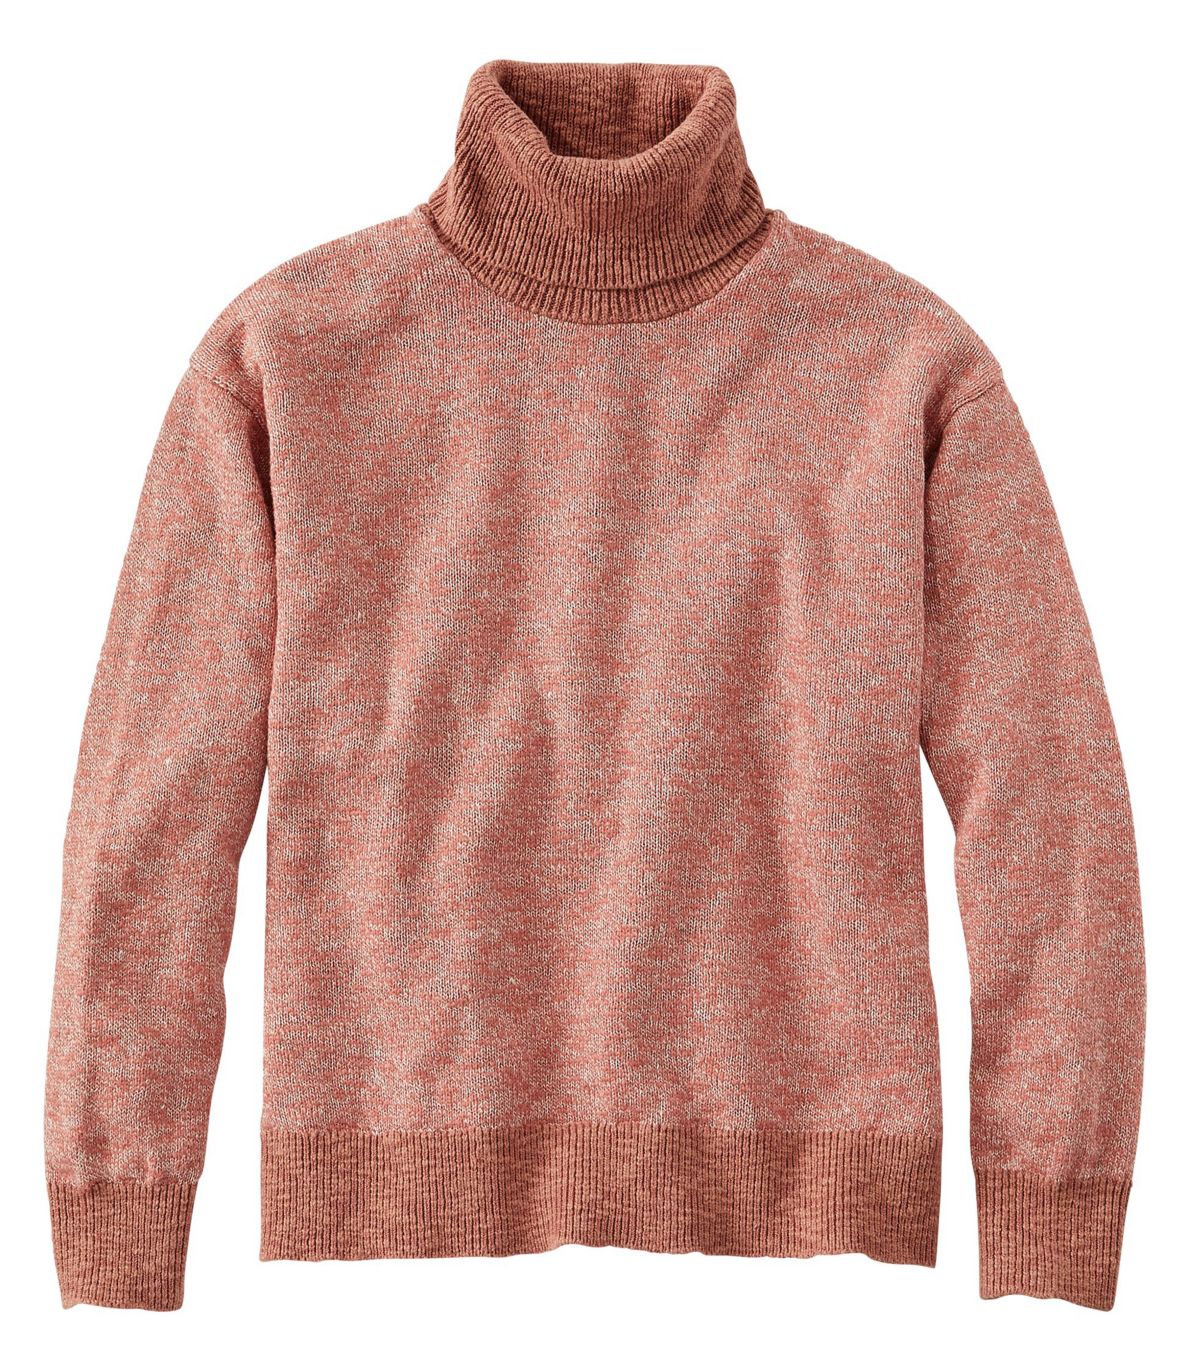 Women's Signature Cotton/Linen Ragg Sweater,Turtleneck